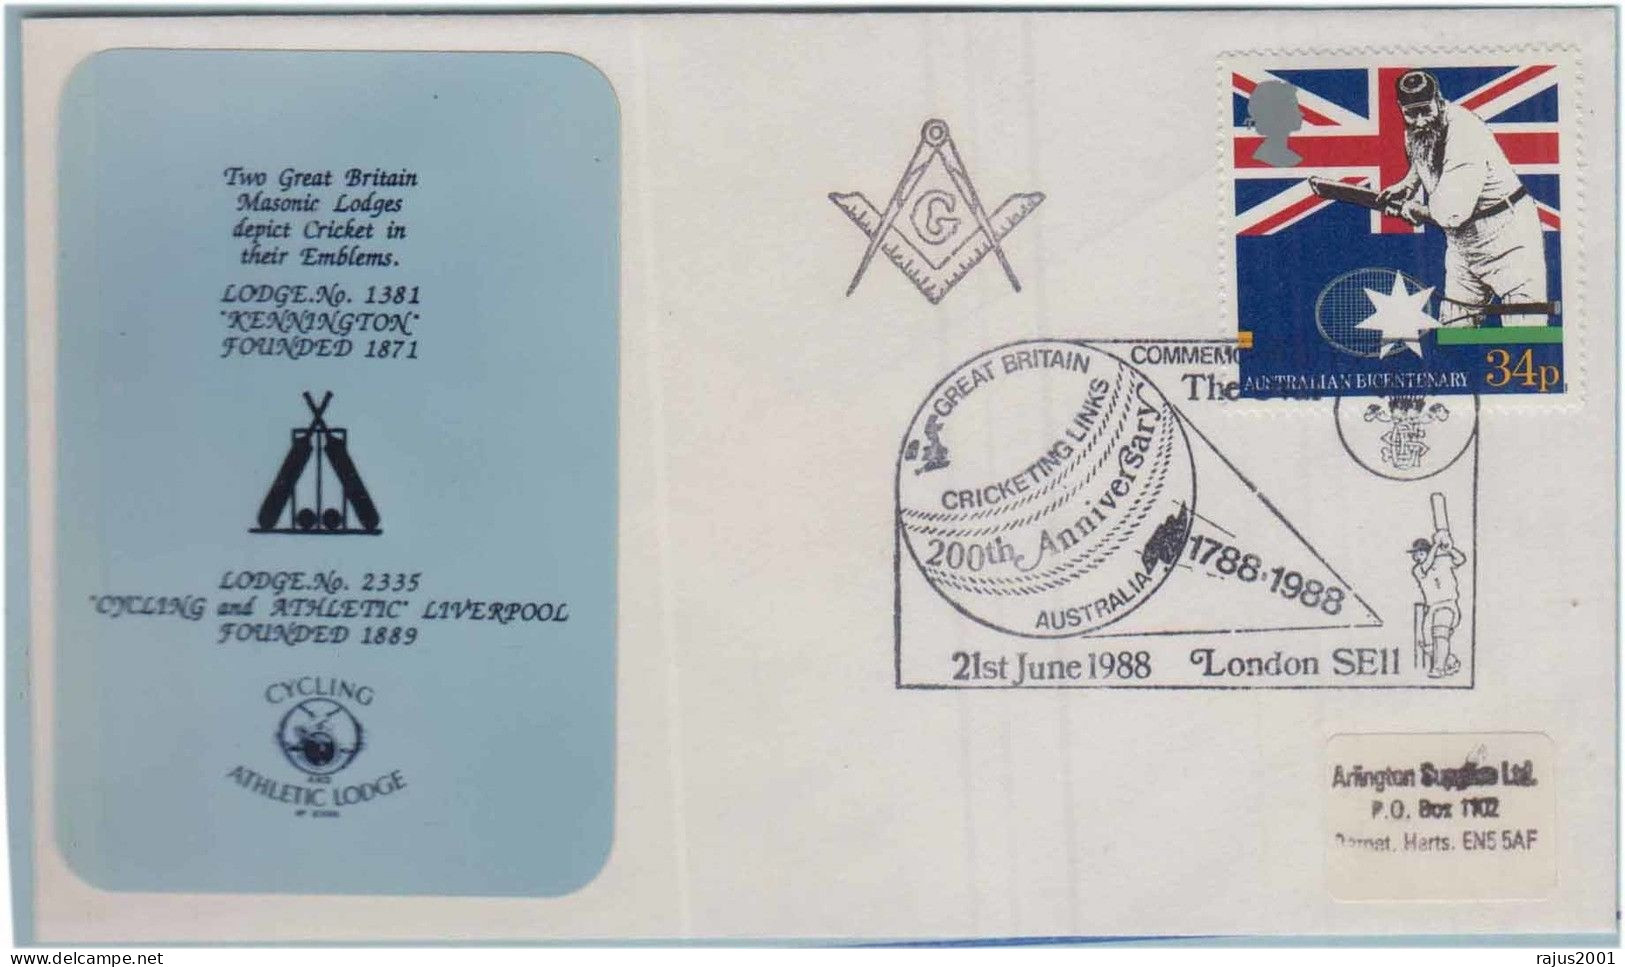 Kennington Lodge No 1381, Cycling And Athletic Lodge No 2335, Cricket Match Ball Bat Freemasonry Masonic Britain Cover - Freemasonry